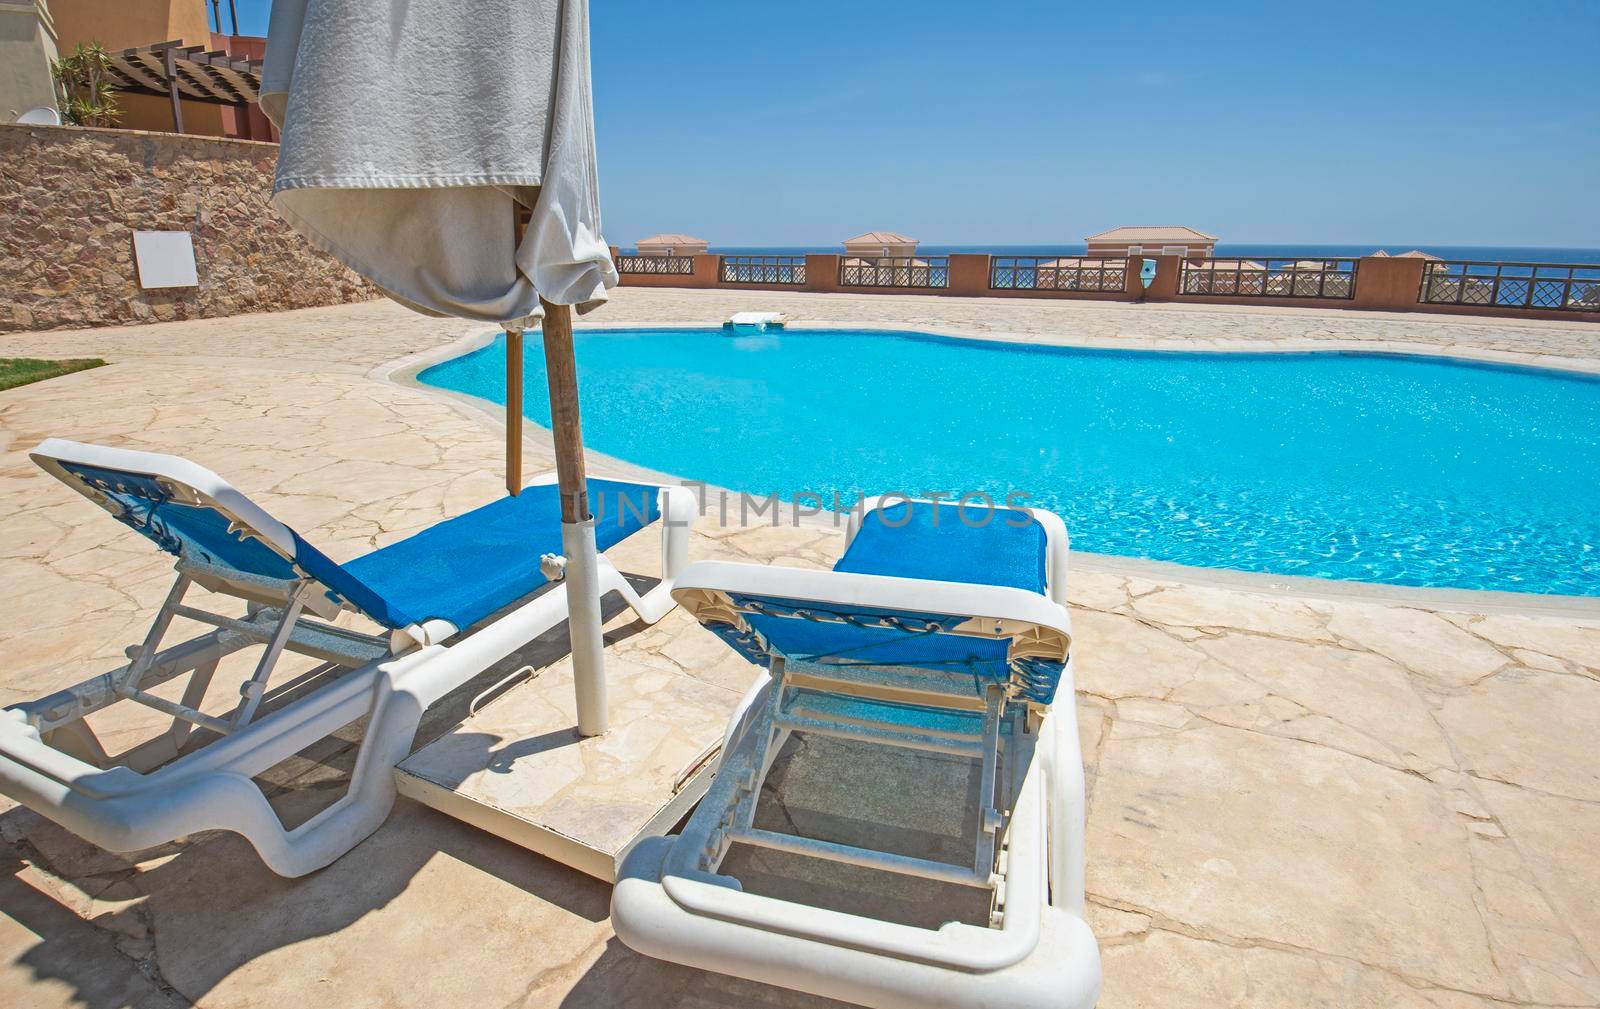 Outdoor swimming pool in a luxury tropical hotel resort by paulvinten